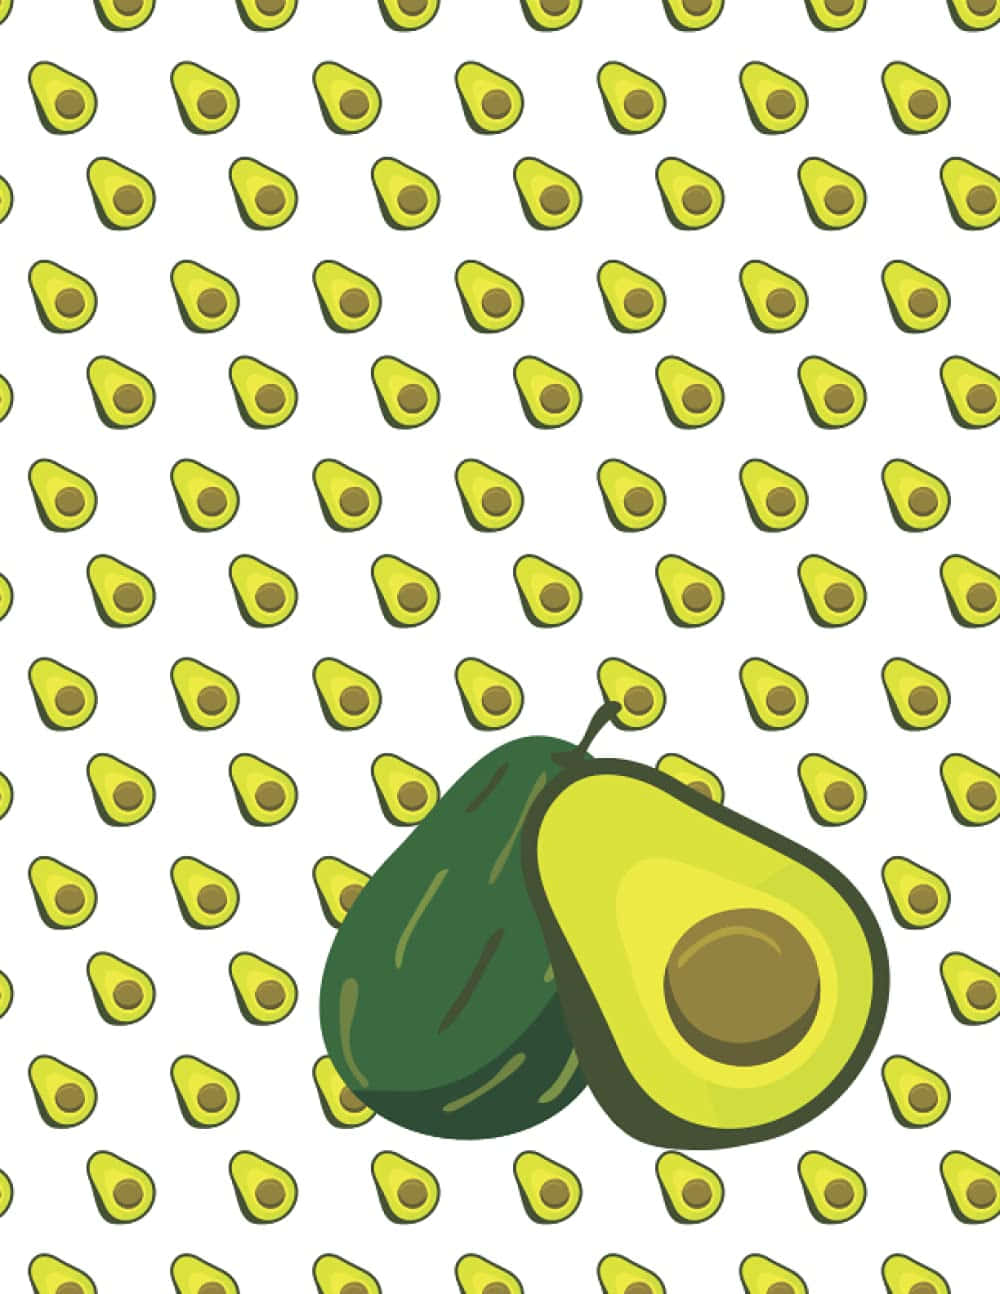 Cute Avocado Wallpaper for Smartphone